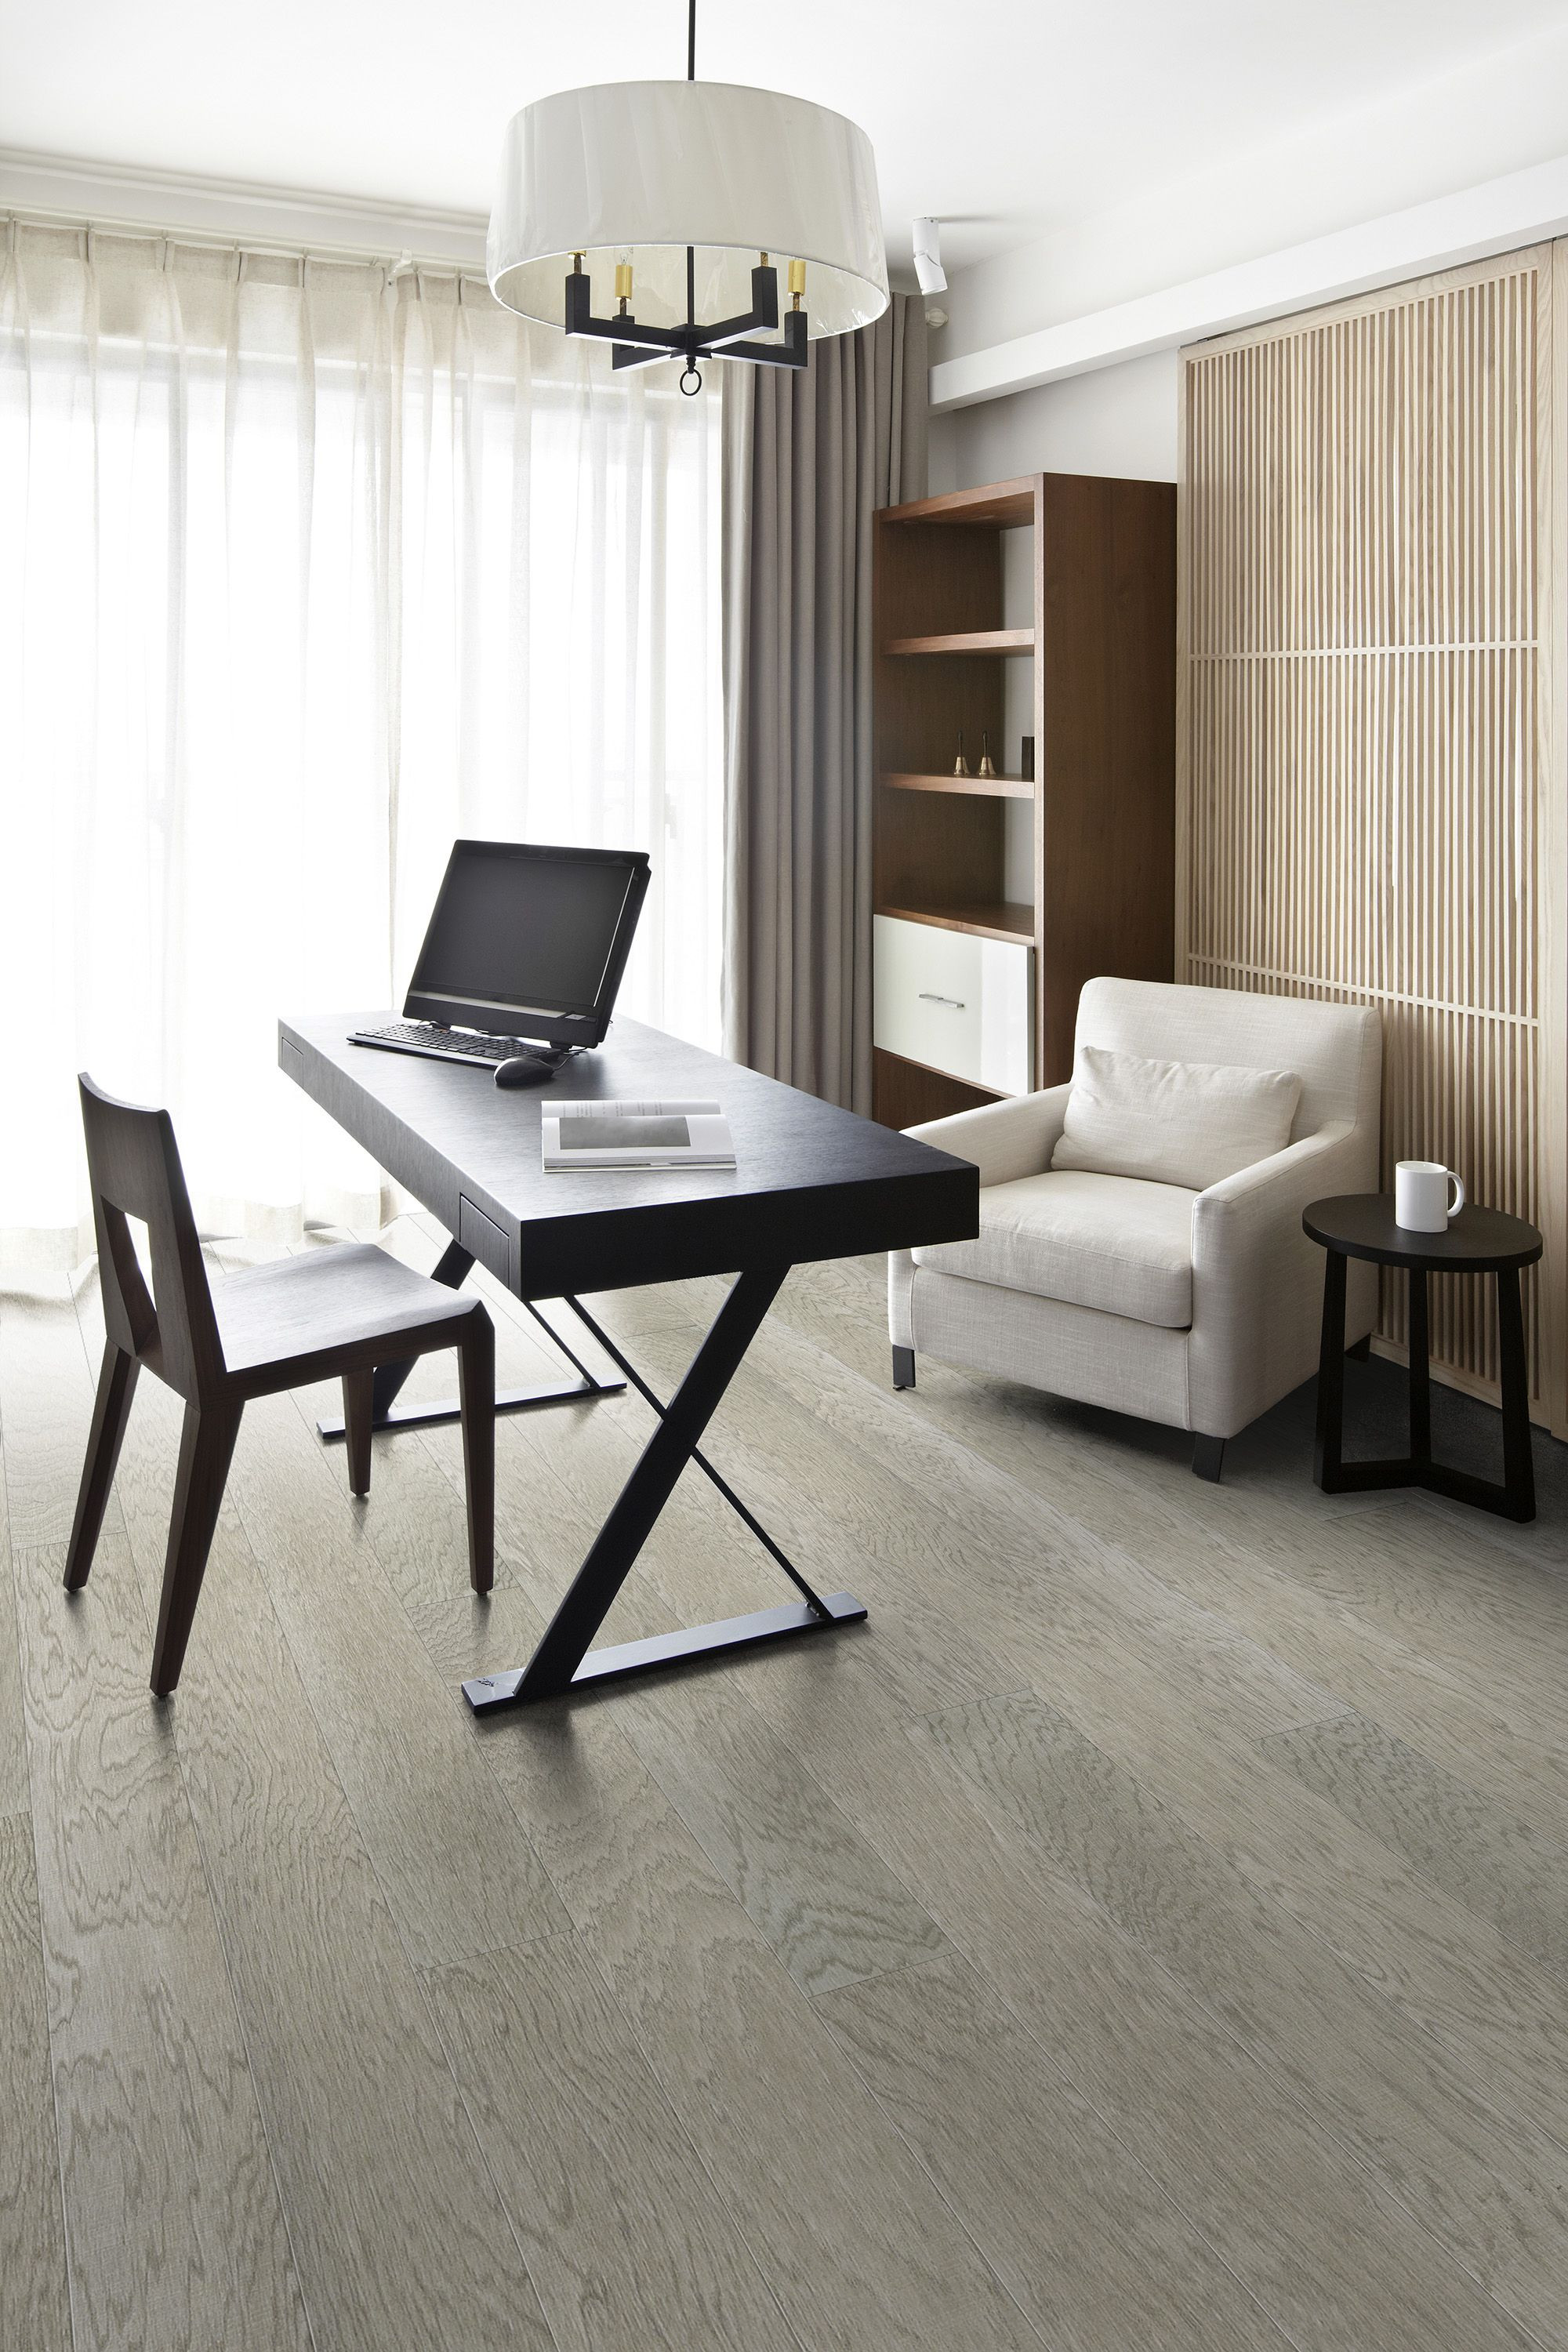 hardwood flooring companies in michigan of soft grey hardwood flooring for a sophisticated office space with soft grey hardwood flooring for a sophisticated office space